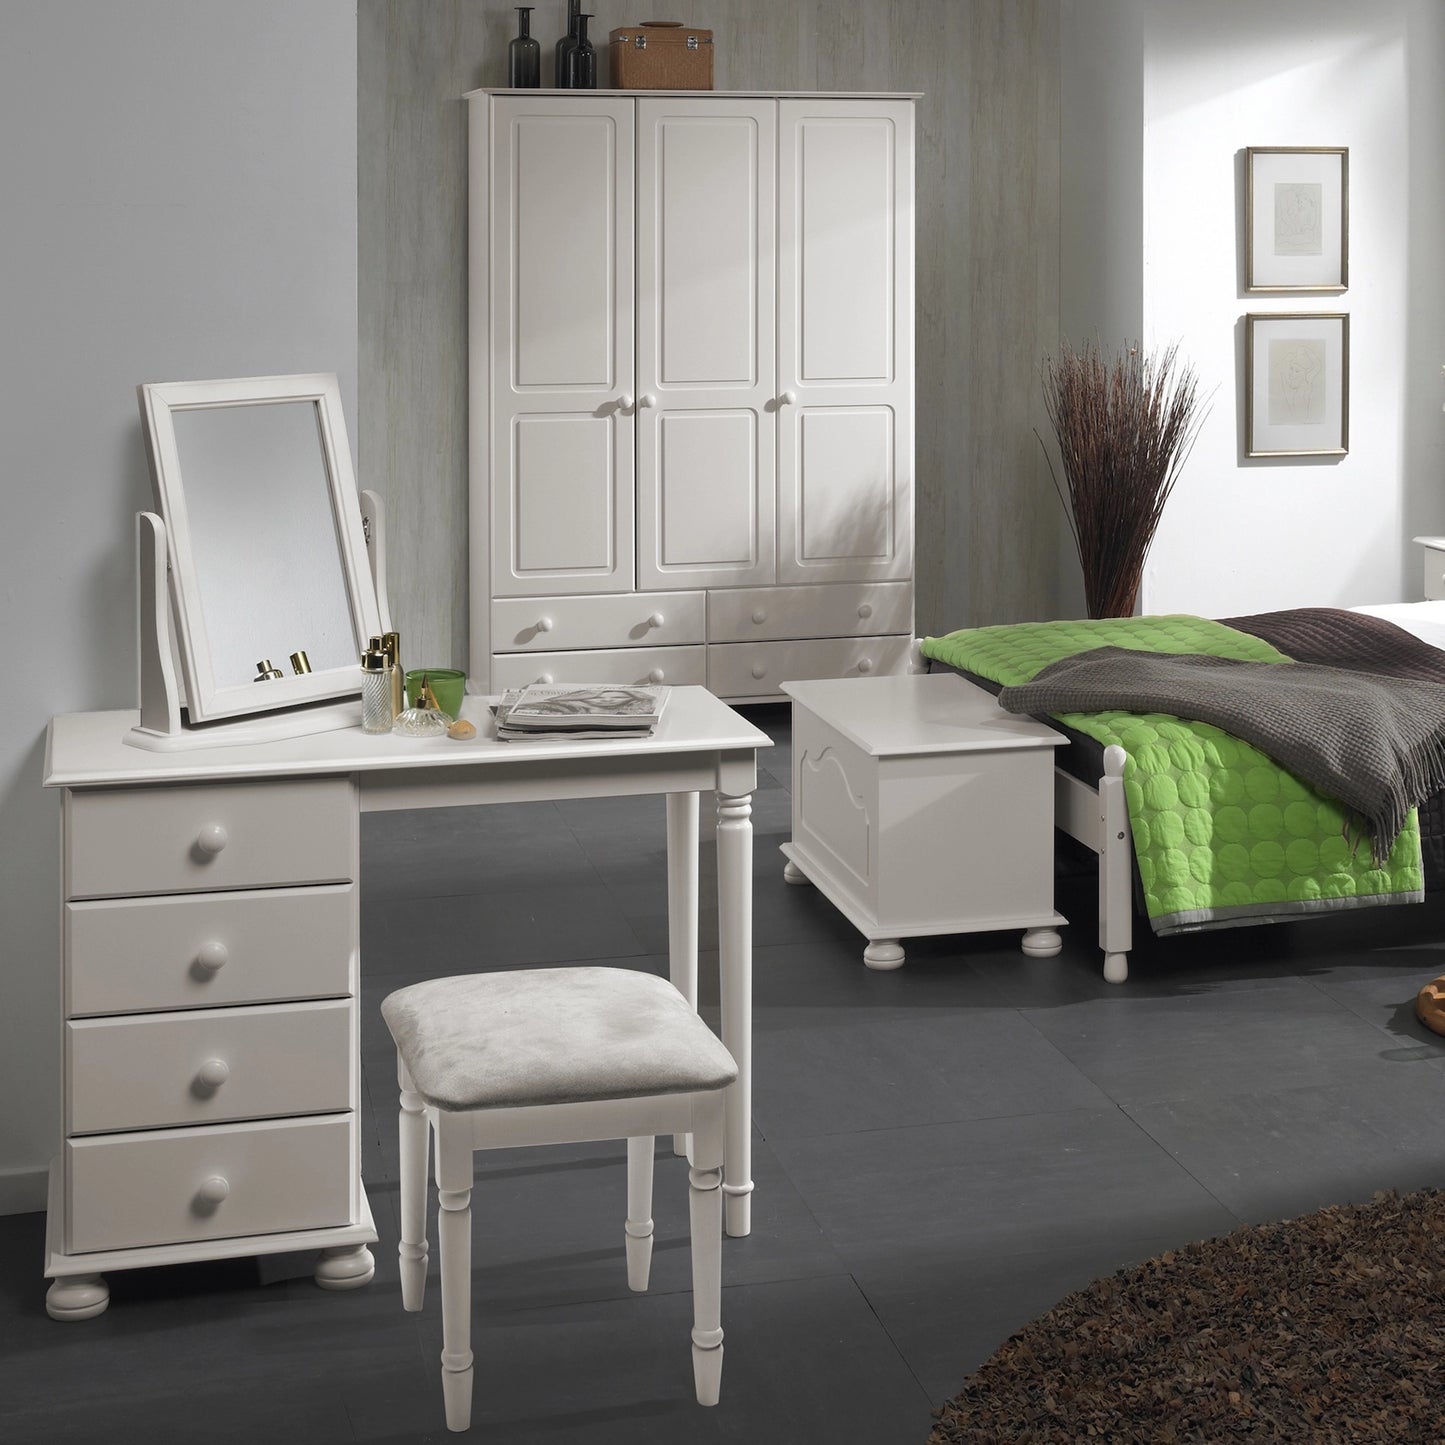 Furniture To Go Copenhagen Single Dressing Table in White